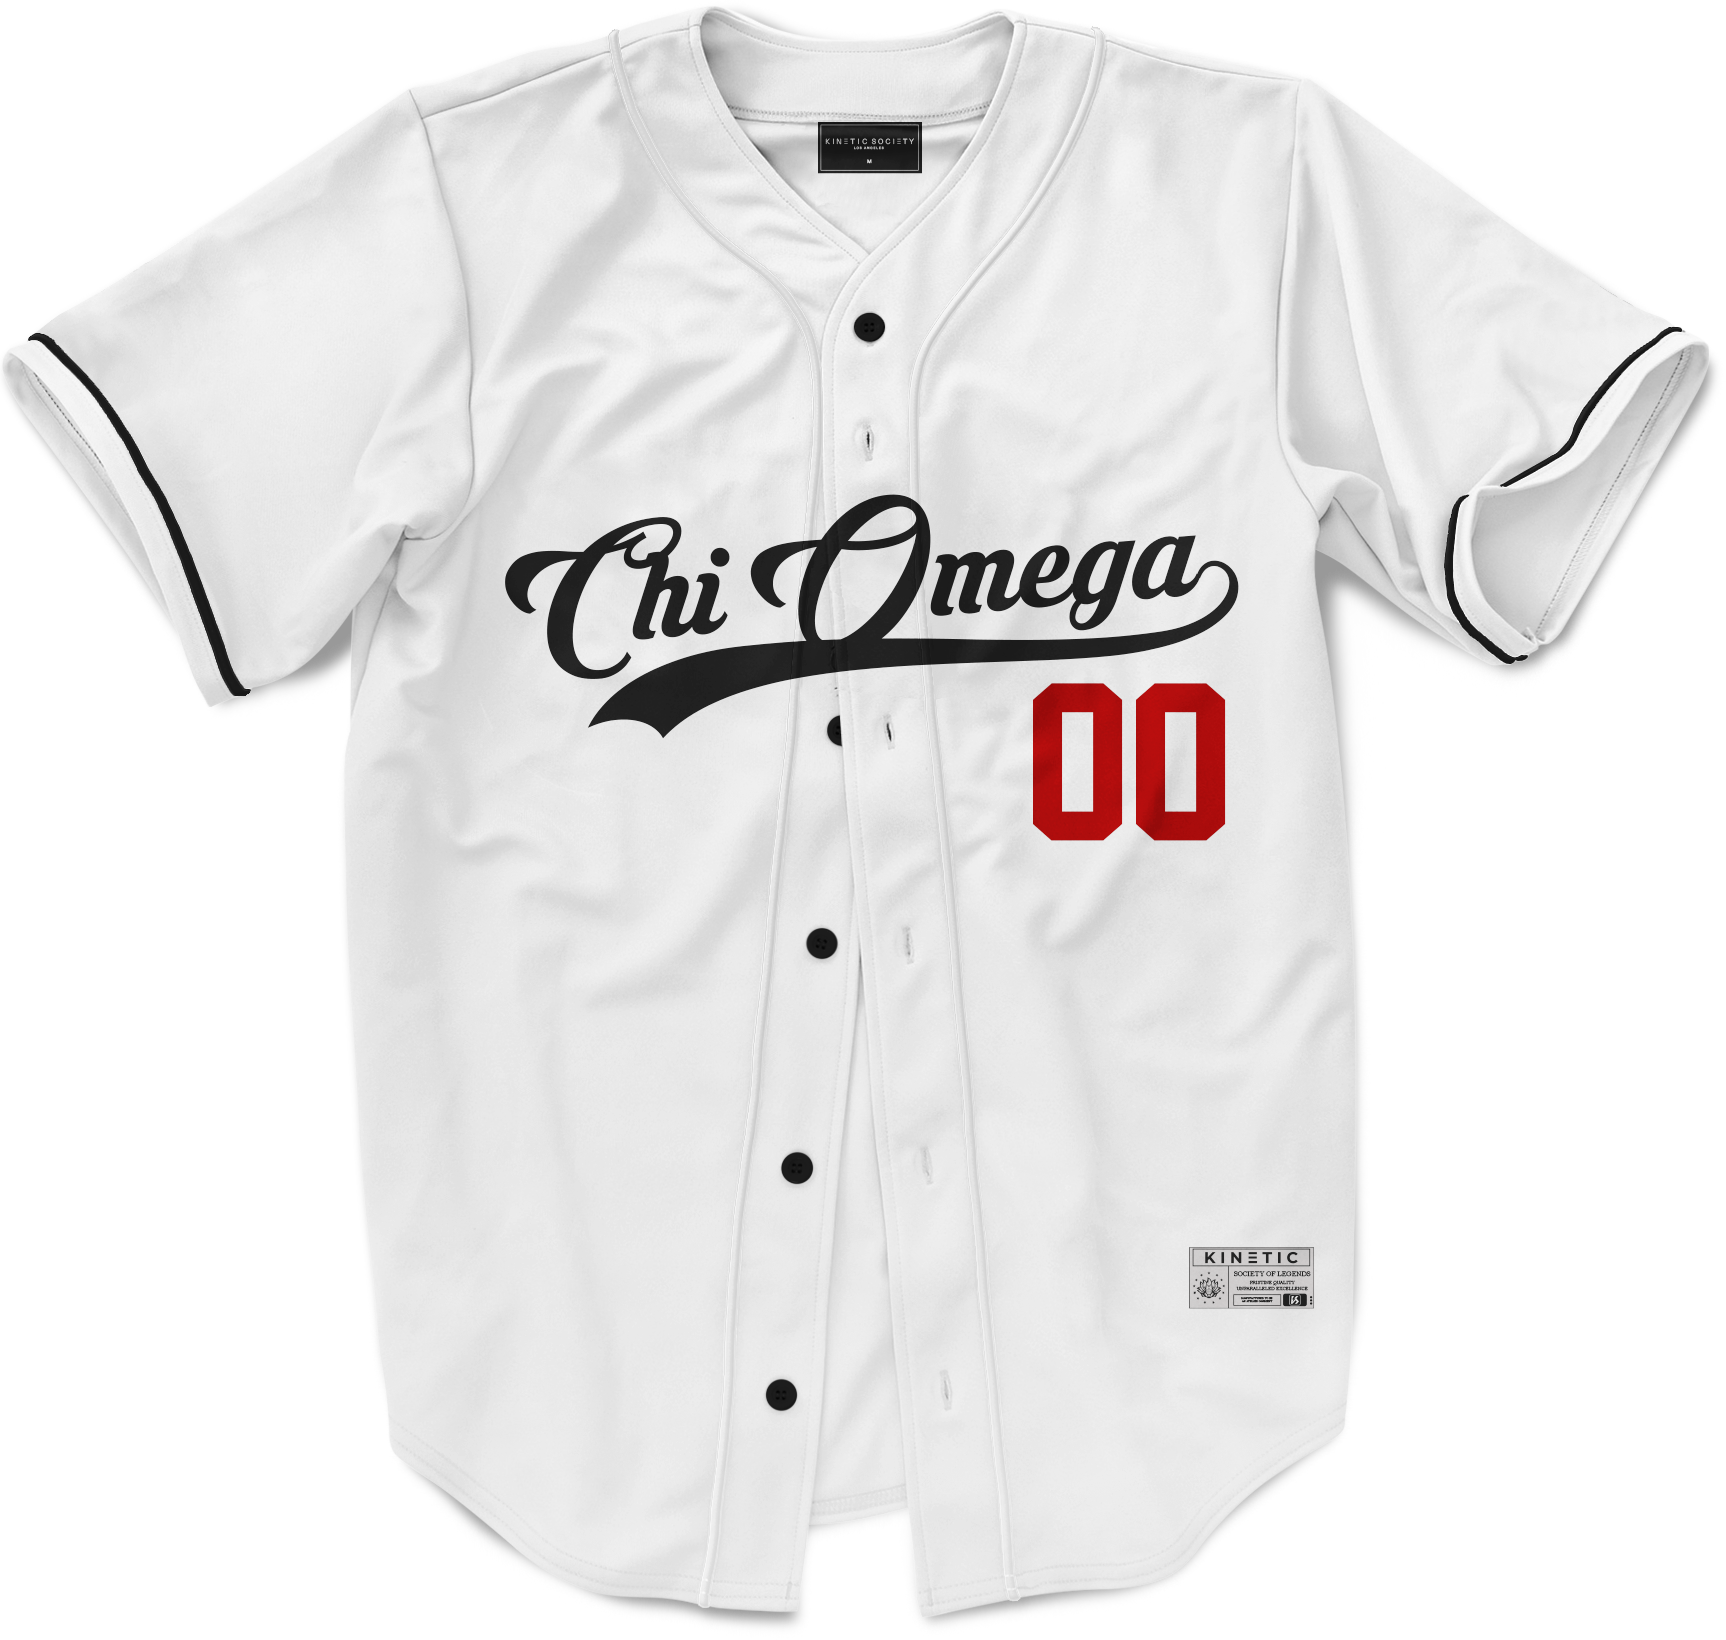 White and Red Baseball Uniform